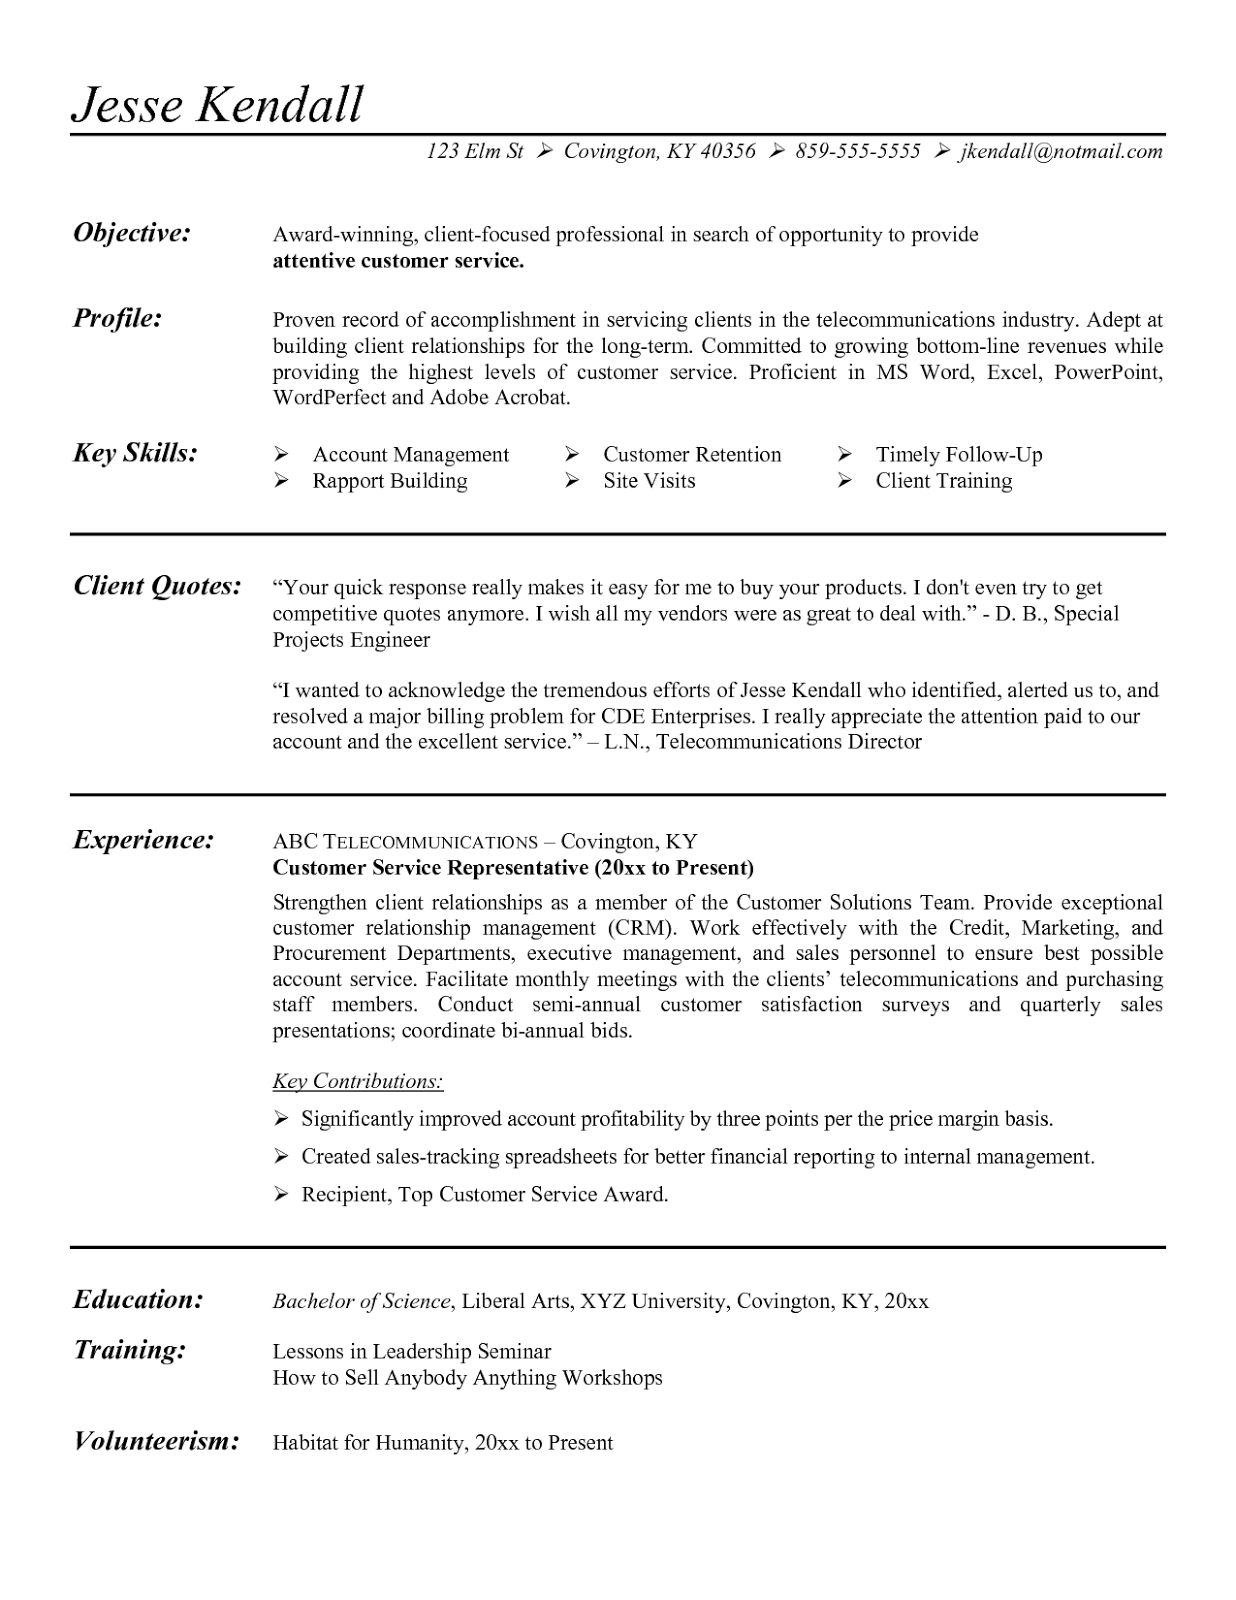 Bilingual and help desk resume